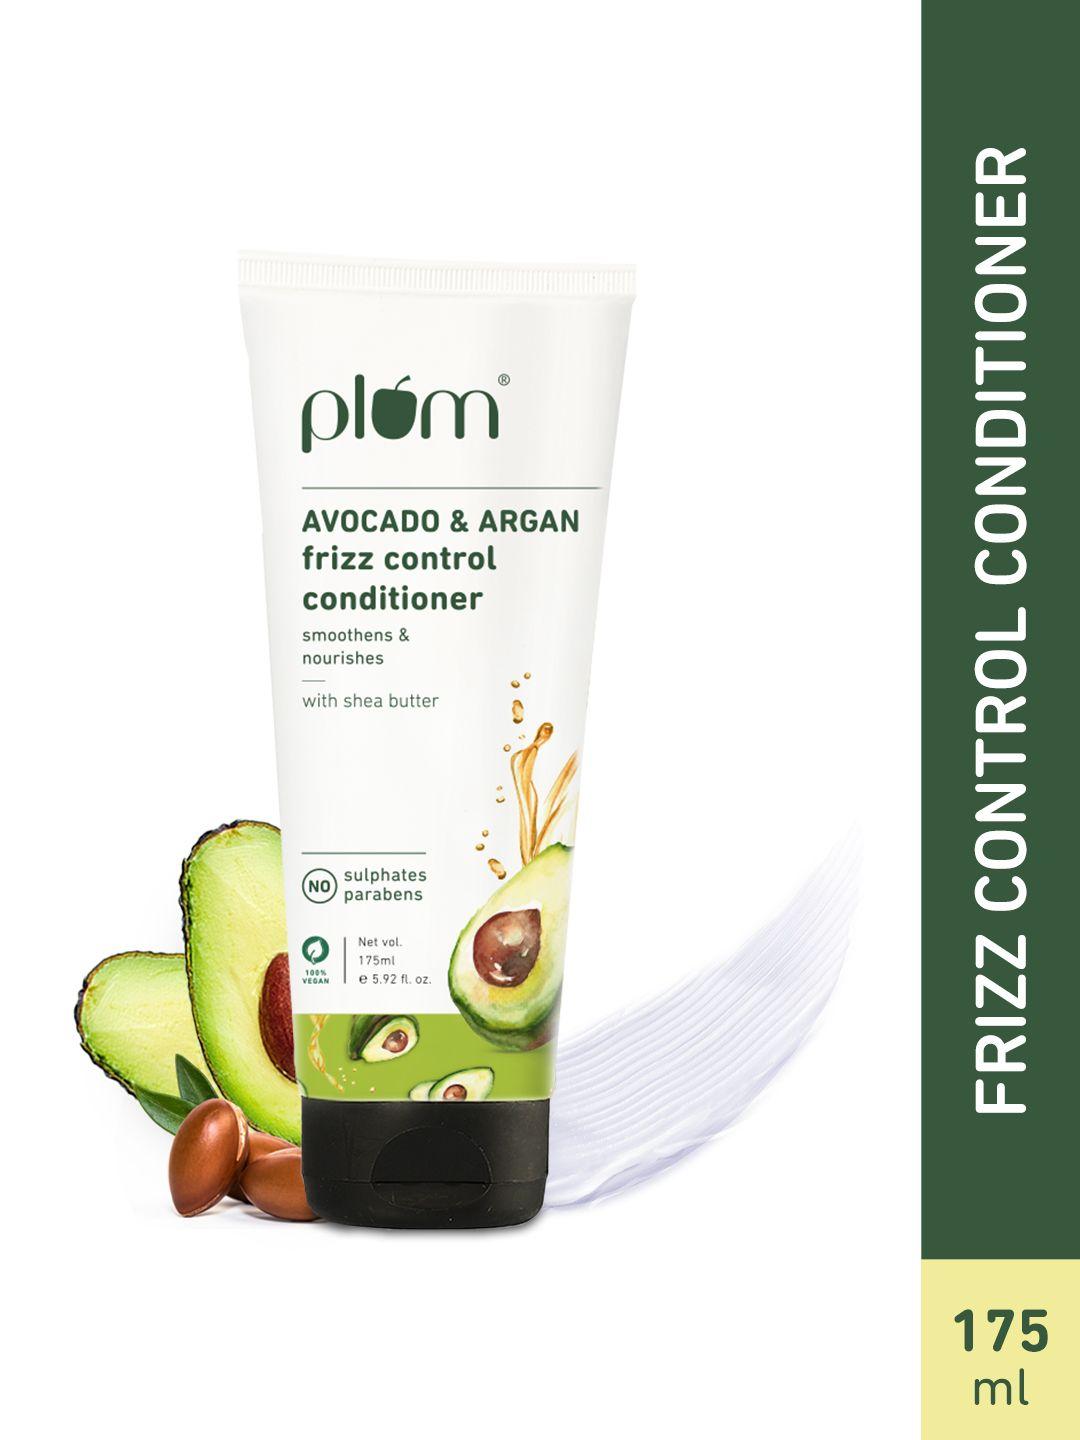 plum avocado & argan frizz control conditioner